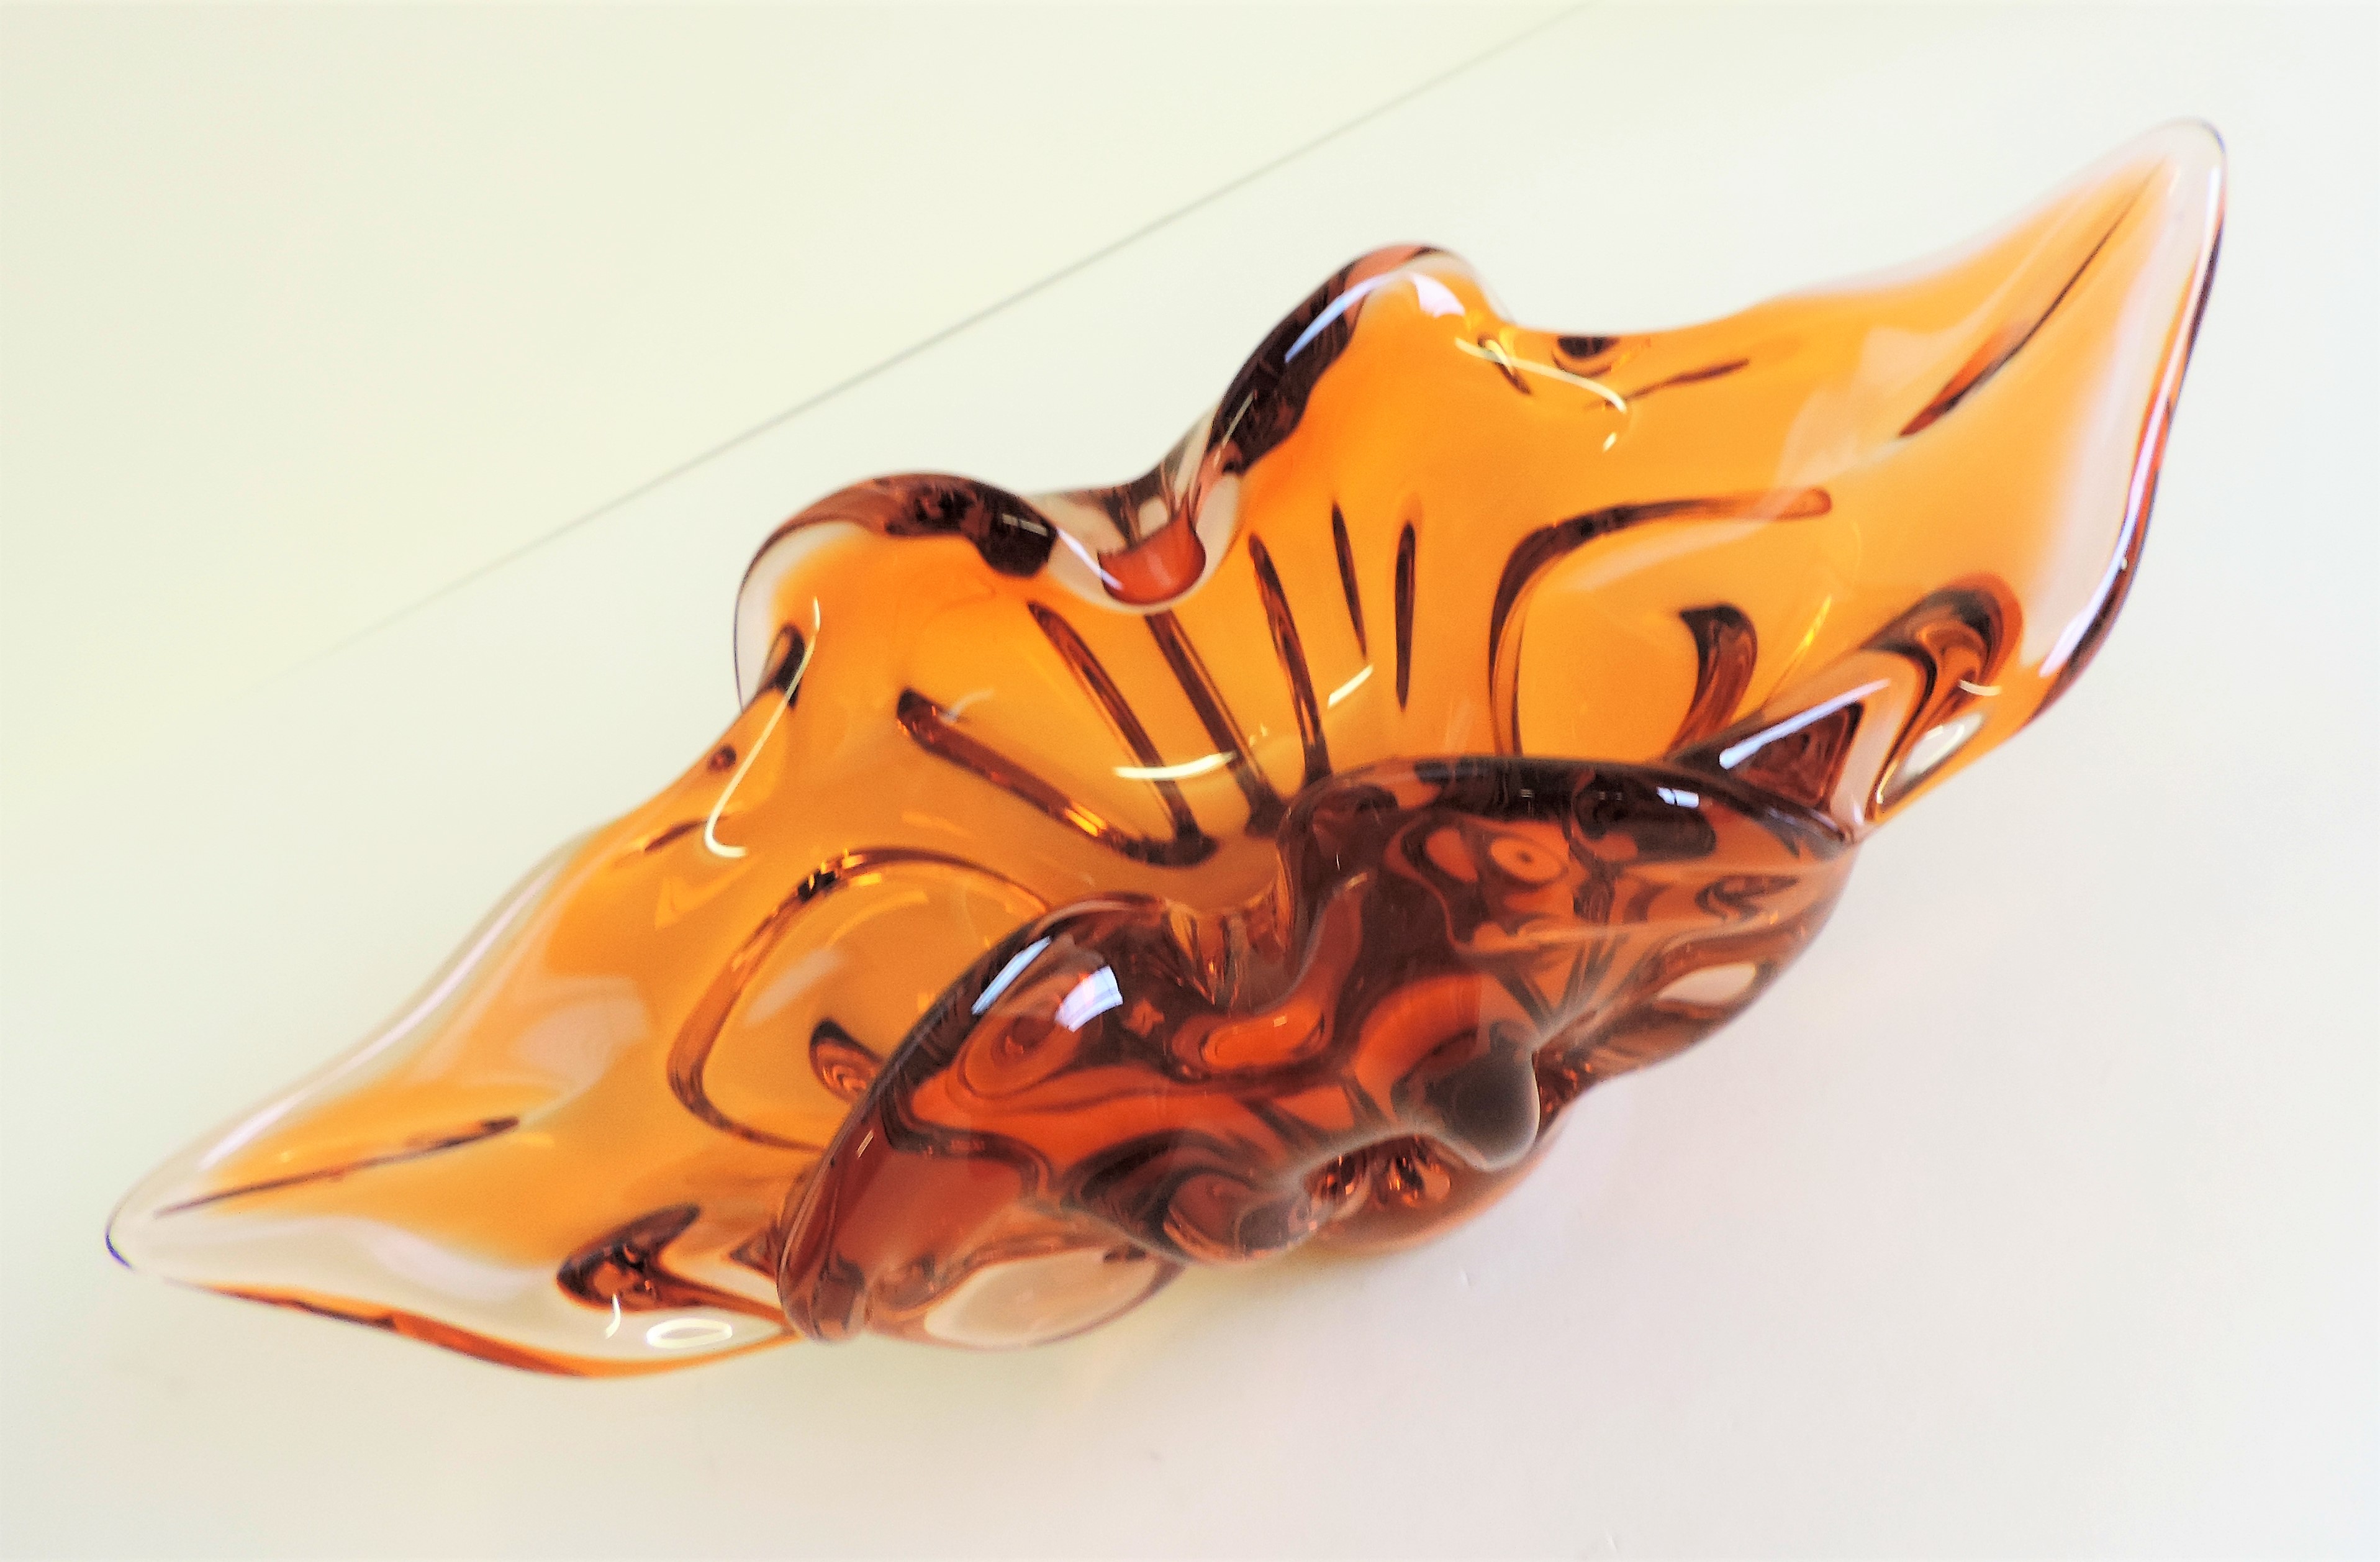 Chribska Czech Amber Glass Bowl by Josef Hospodka - Image 3 of 5